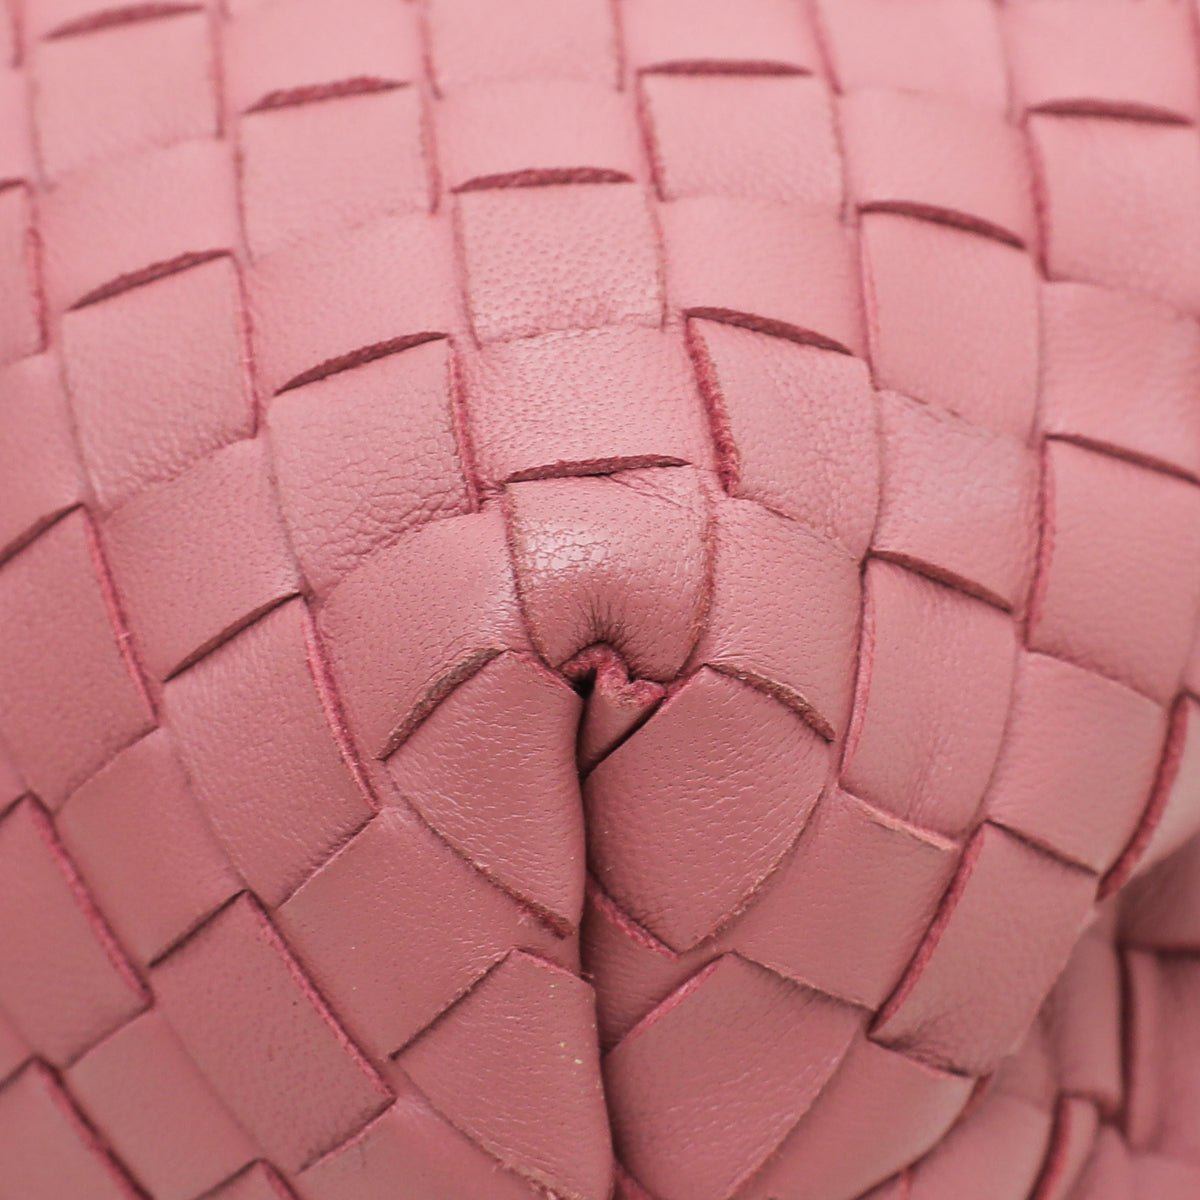 Vintage Bottega Veneta Intrecciato Campana Shoulder Bag Pink